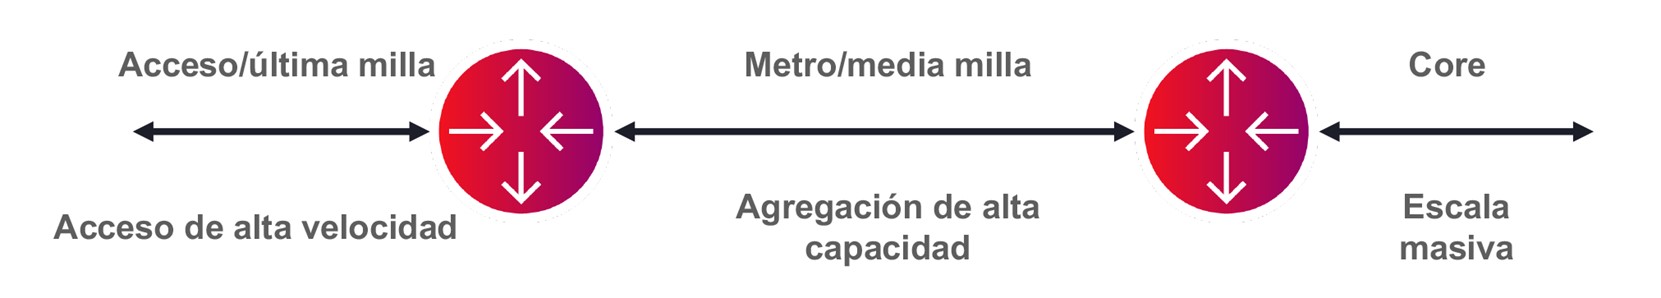 Latin American translation for the fiber access diagram